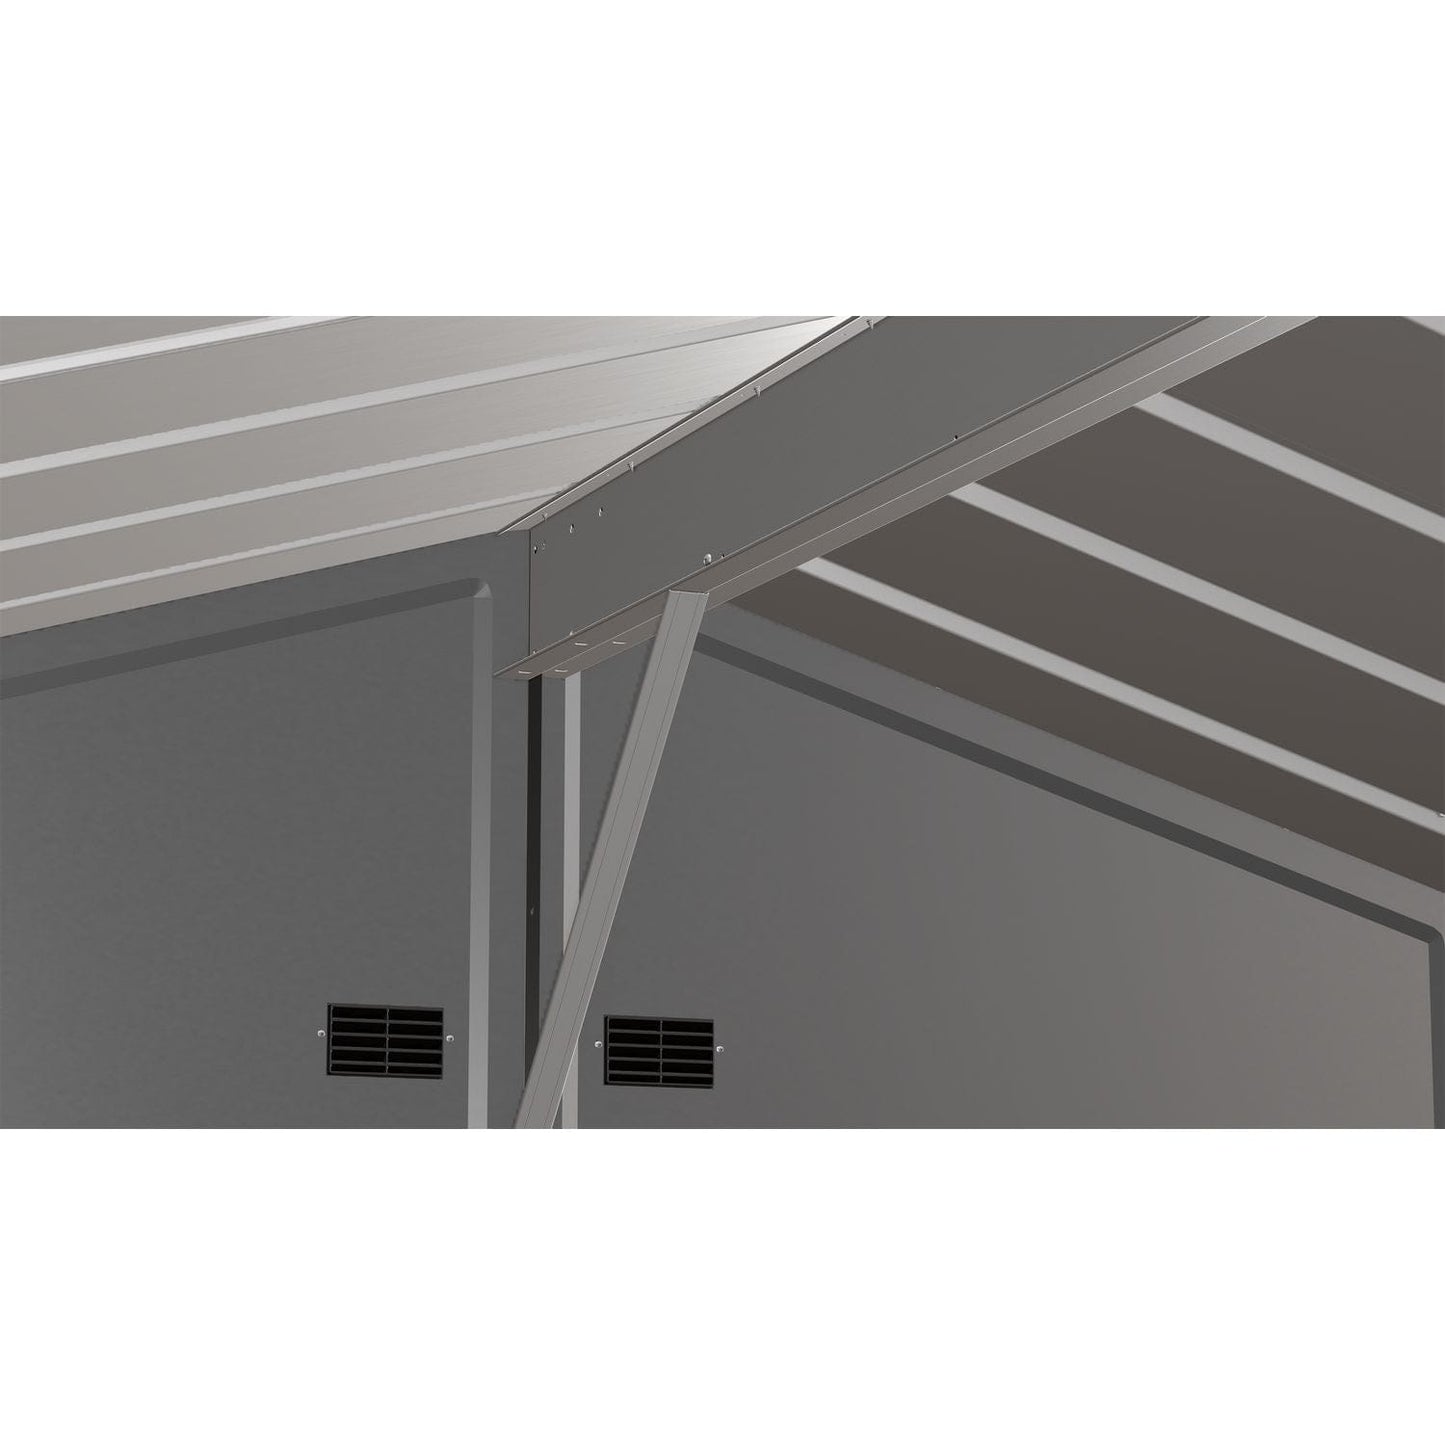 Arrow Sheds & Storage Buildings Arrow | Select Gable Roof Steel Storage Shed, 8x8 ft., Charcoal SCG88CC